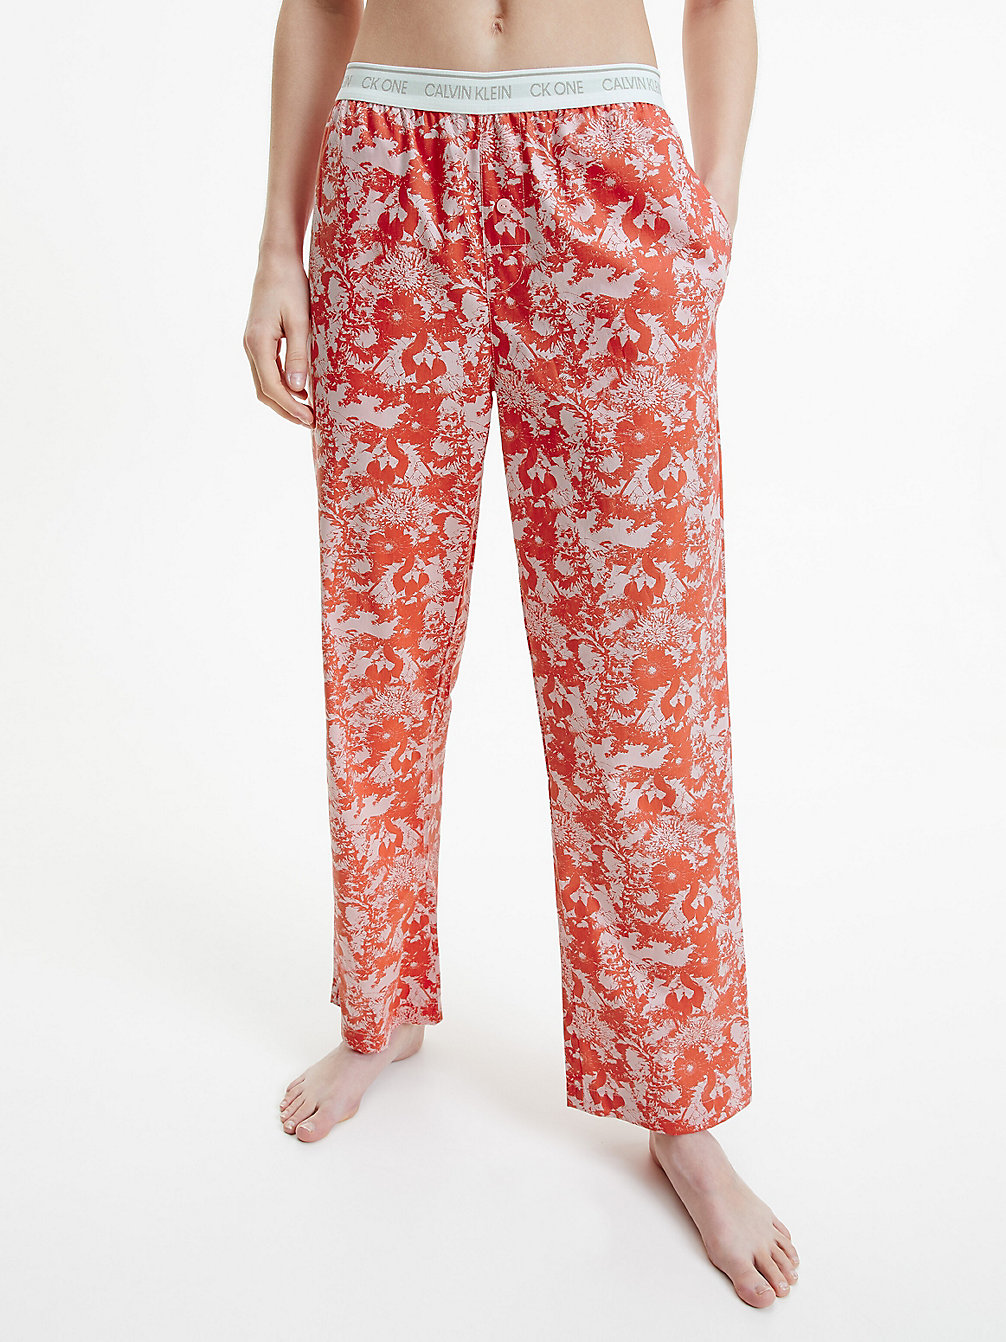 SOLAR FLORAL PRINT_PINK SHELL Pyjama Pants - CK One undefined women Calvin Klein